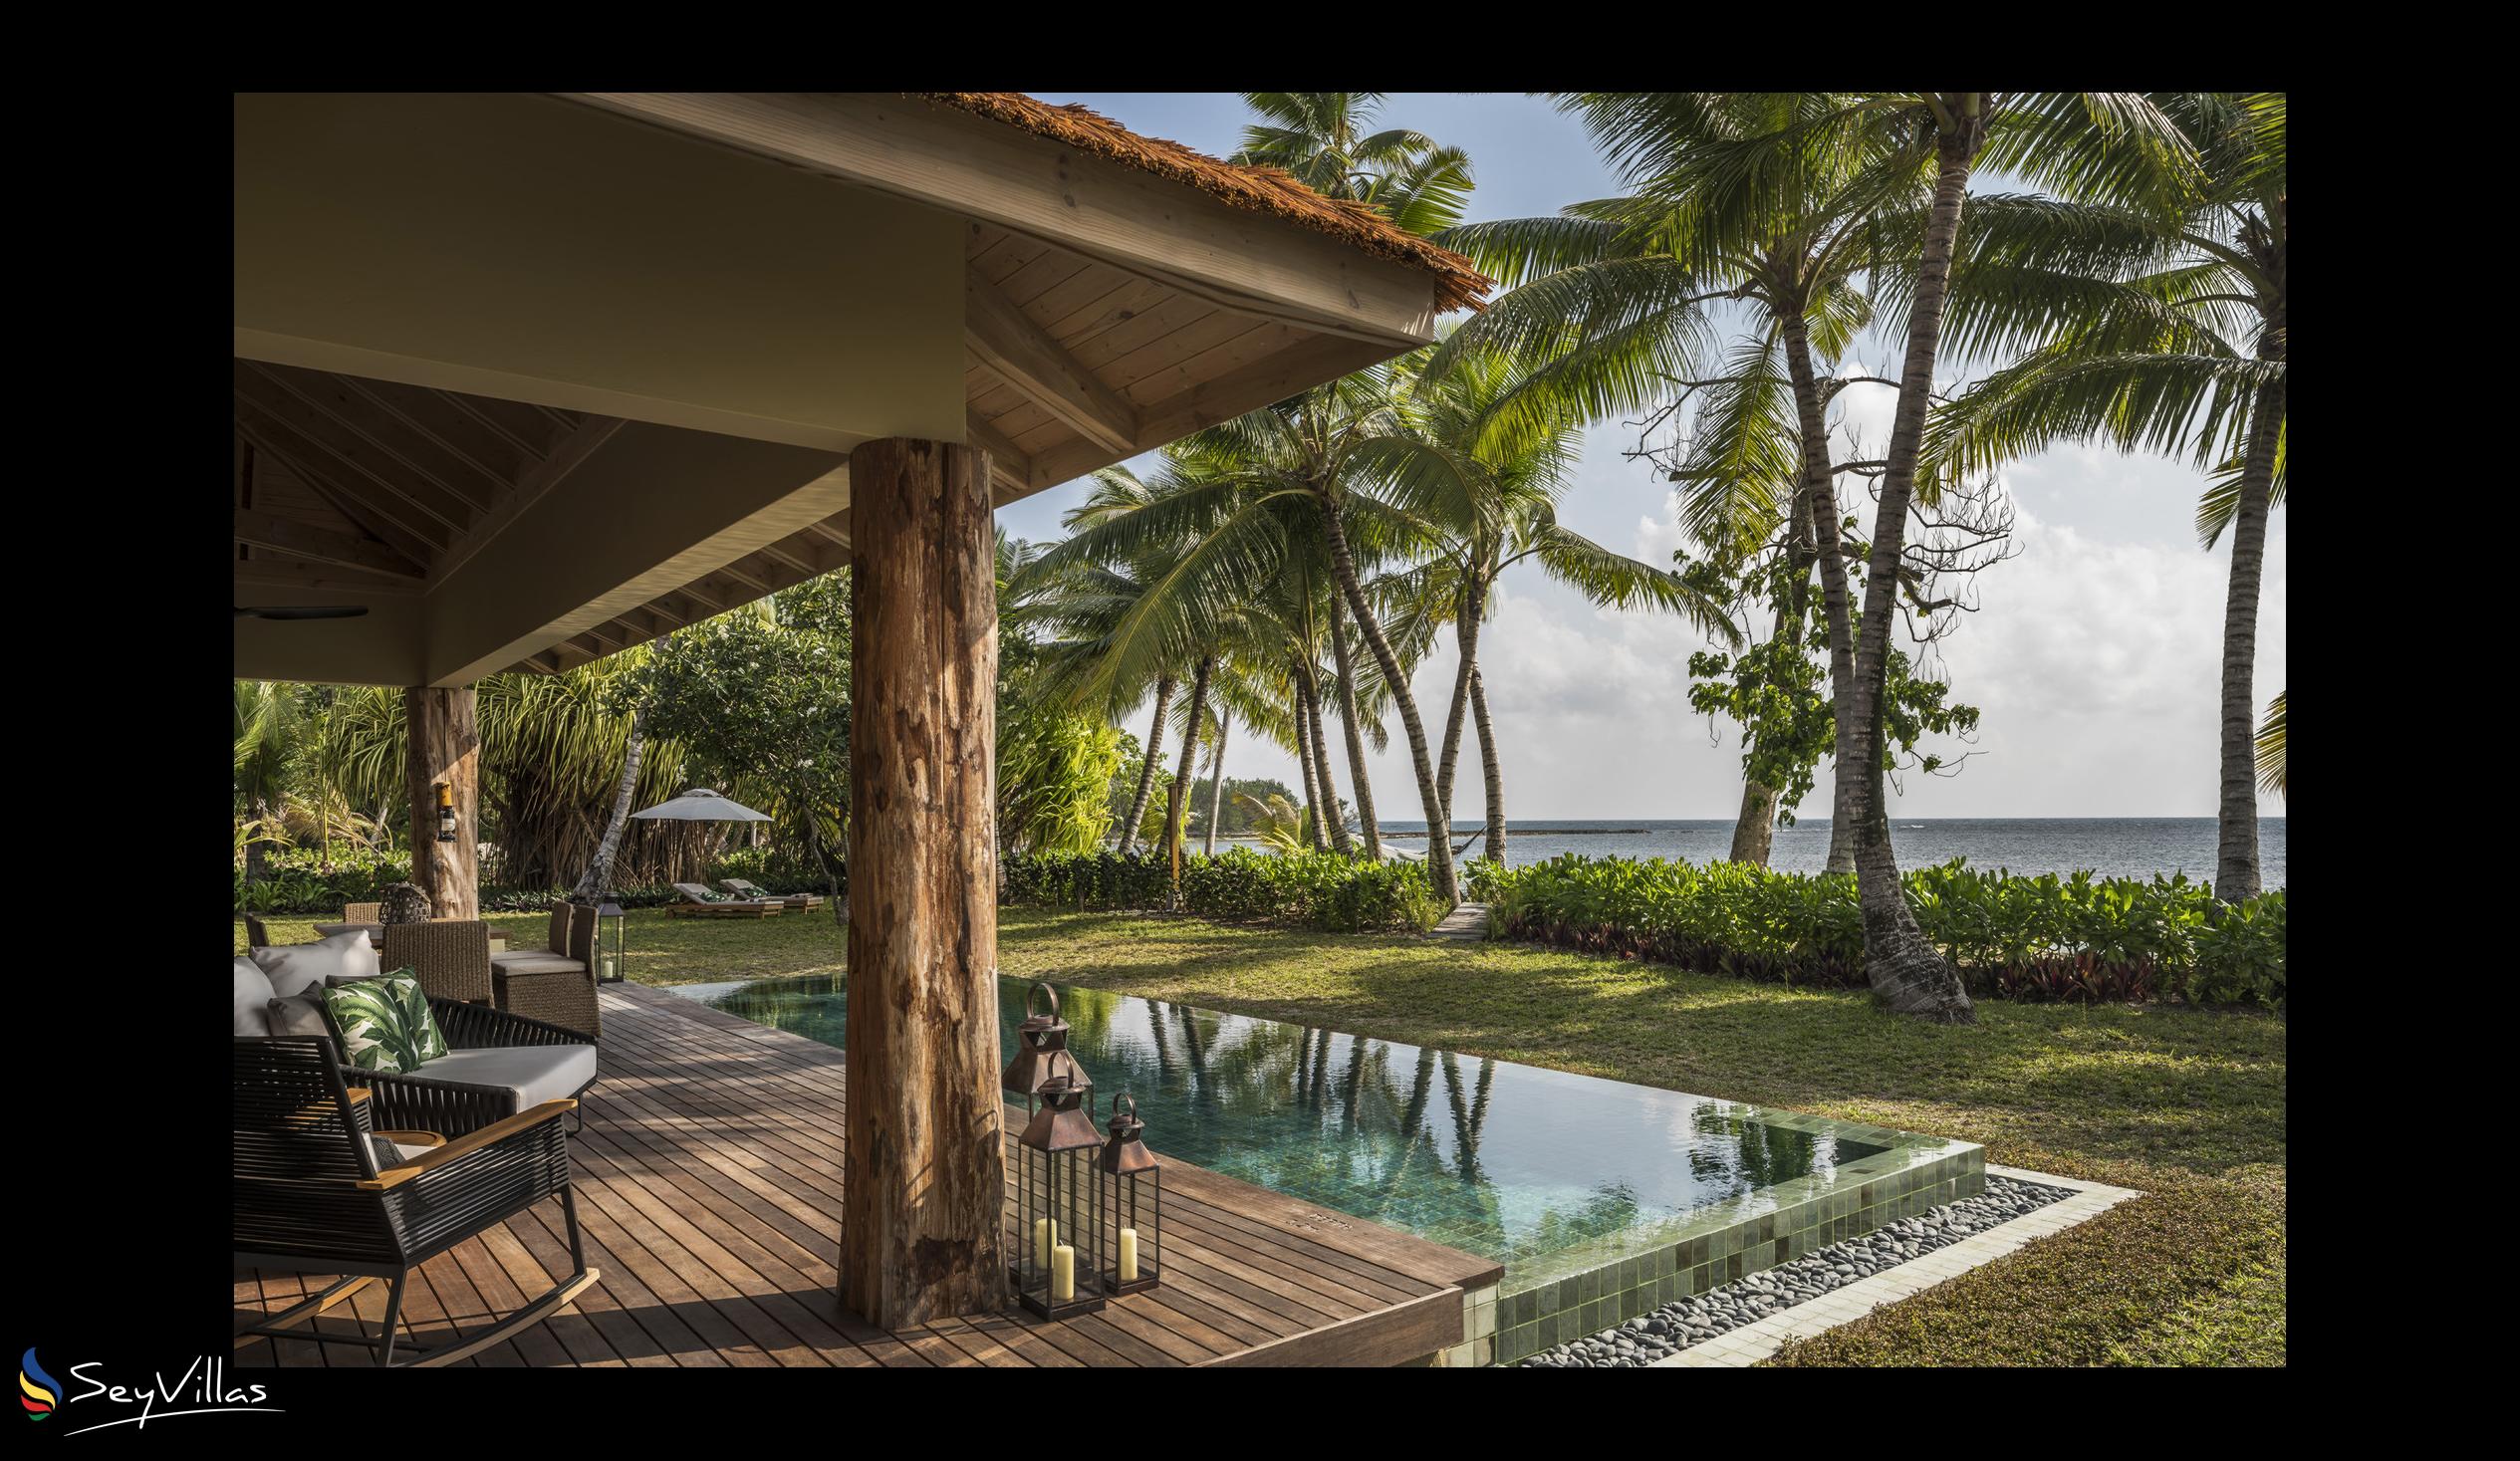 Foto 200: Four Seasons Resort Desroches Island - Desroches Suite - Desroches Island (Seychellen)